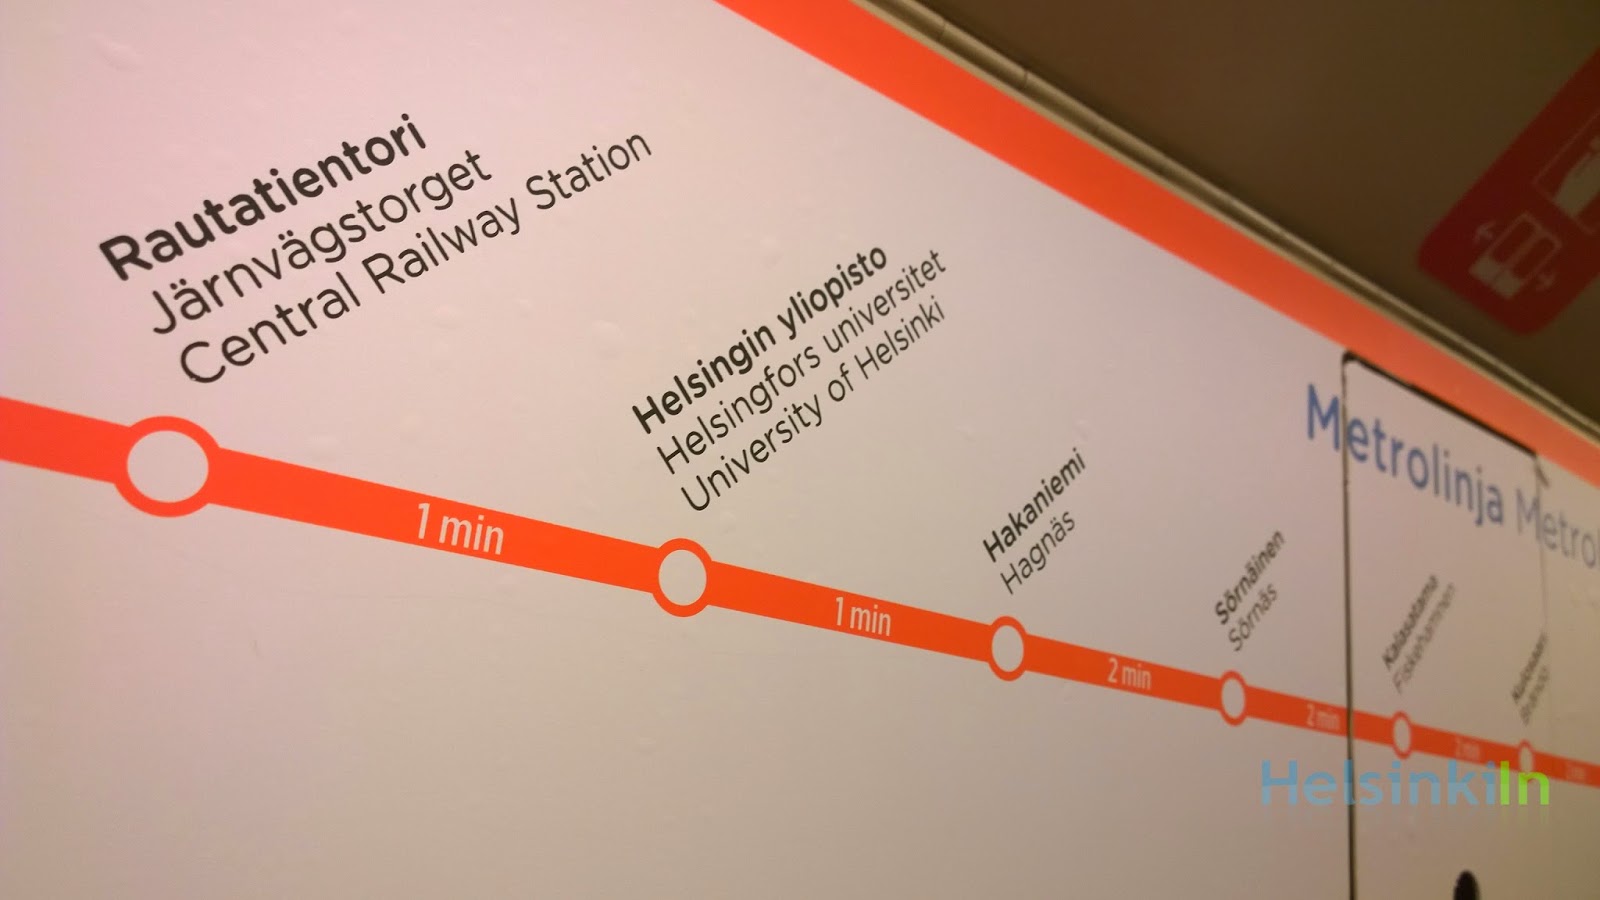 Helsinki's new metro station